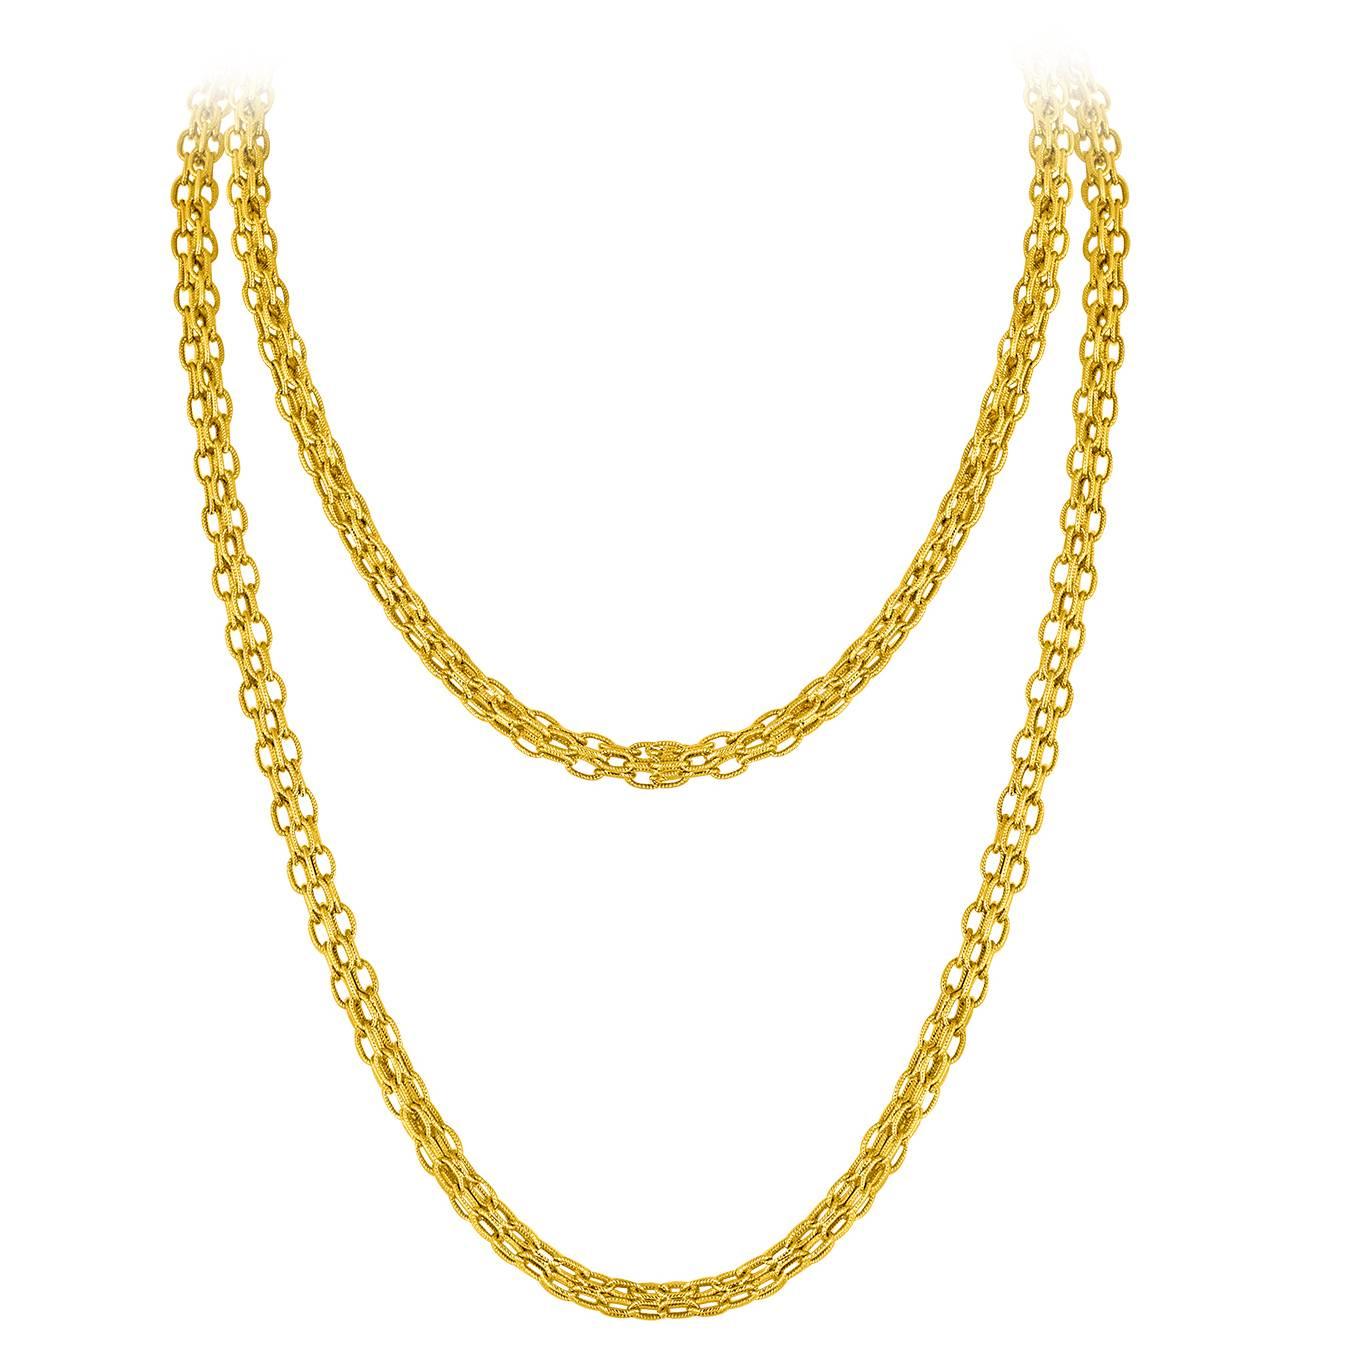 Tiffany & Co. Estate Gold Chain Necklace C.1960's